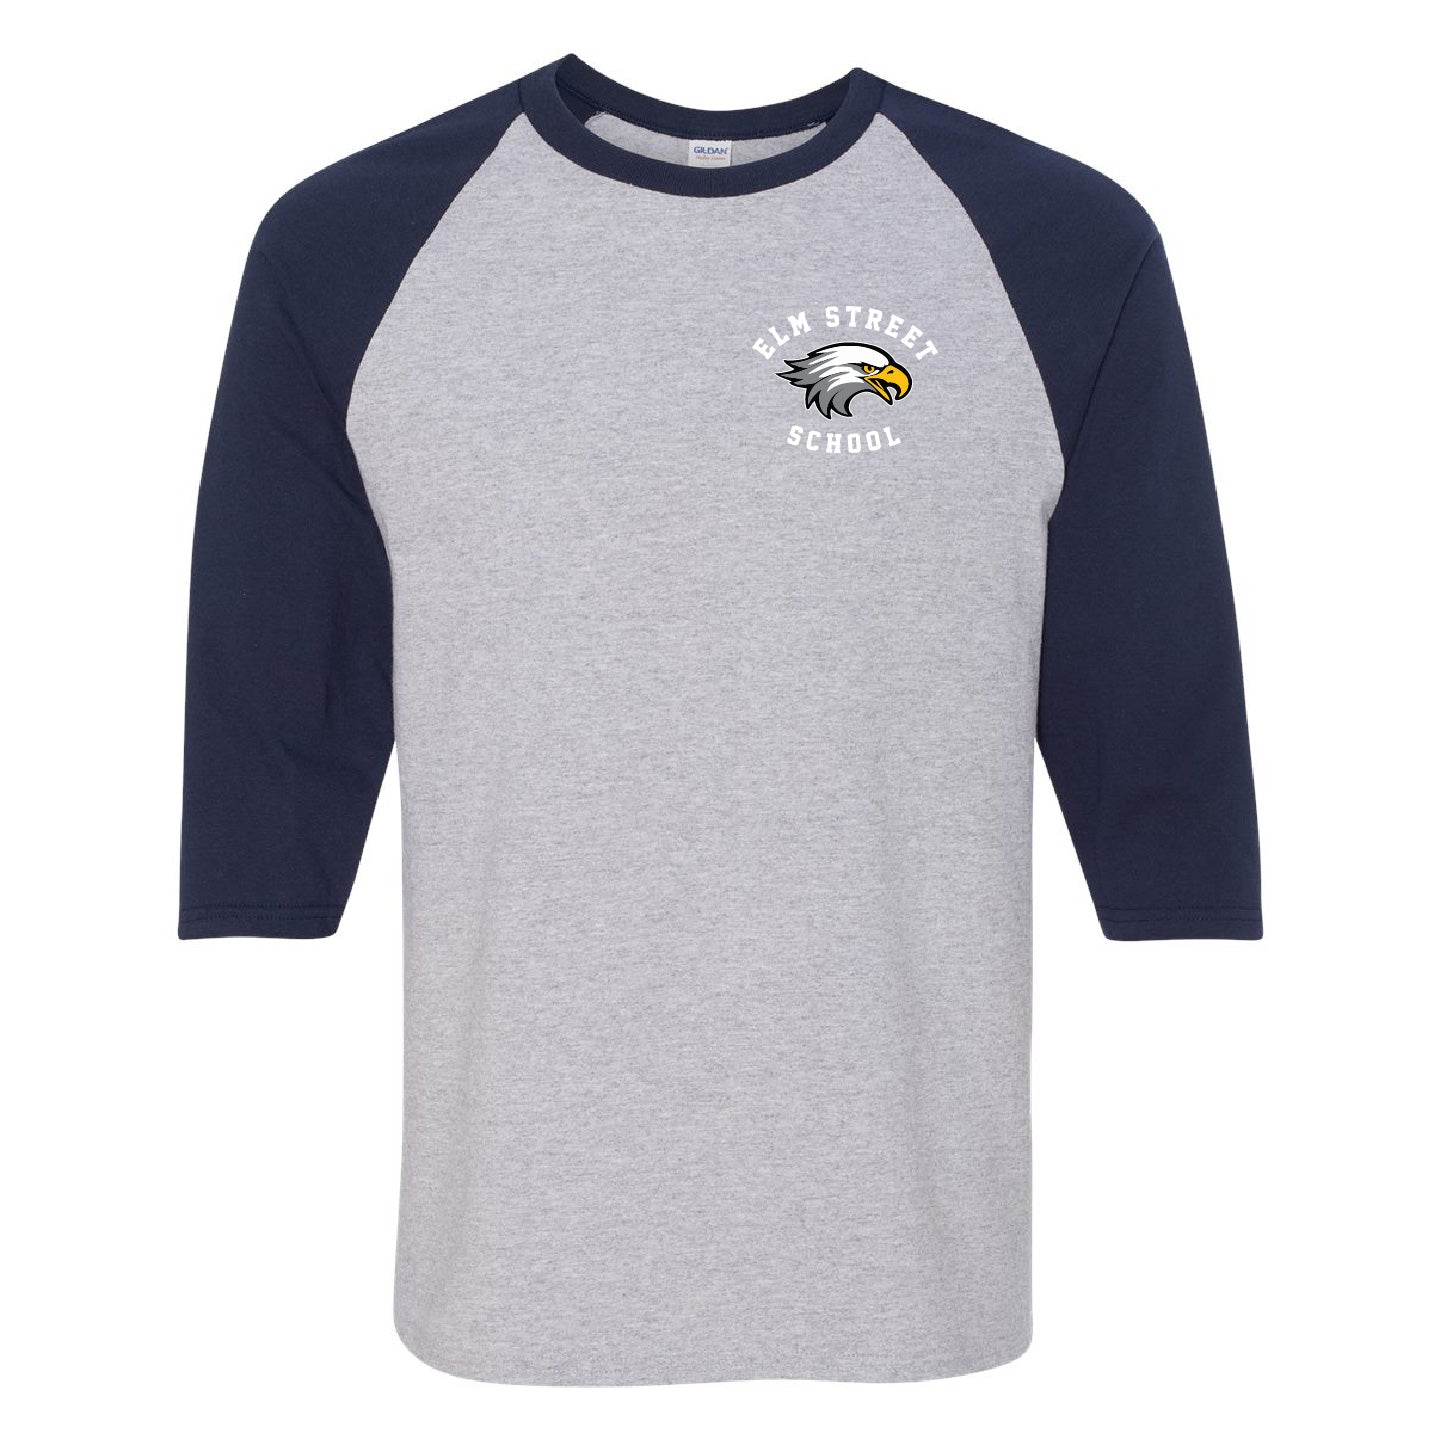 Elm Street School Adult Baseball T-Shirt (ESST001-5540)